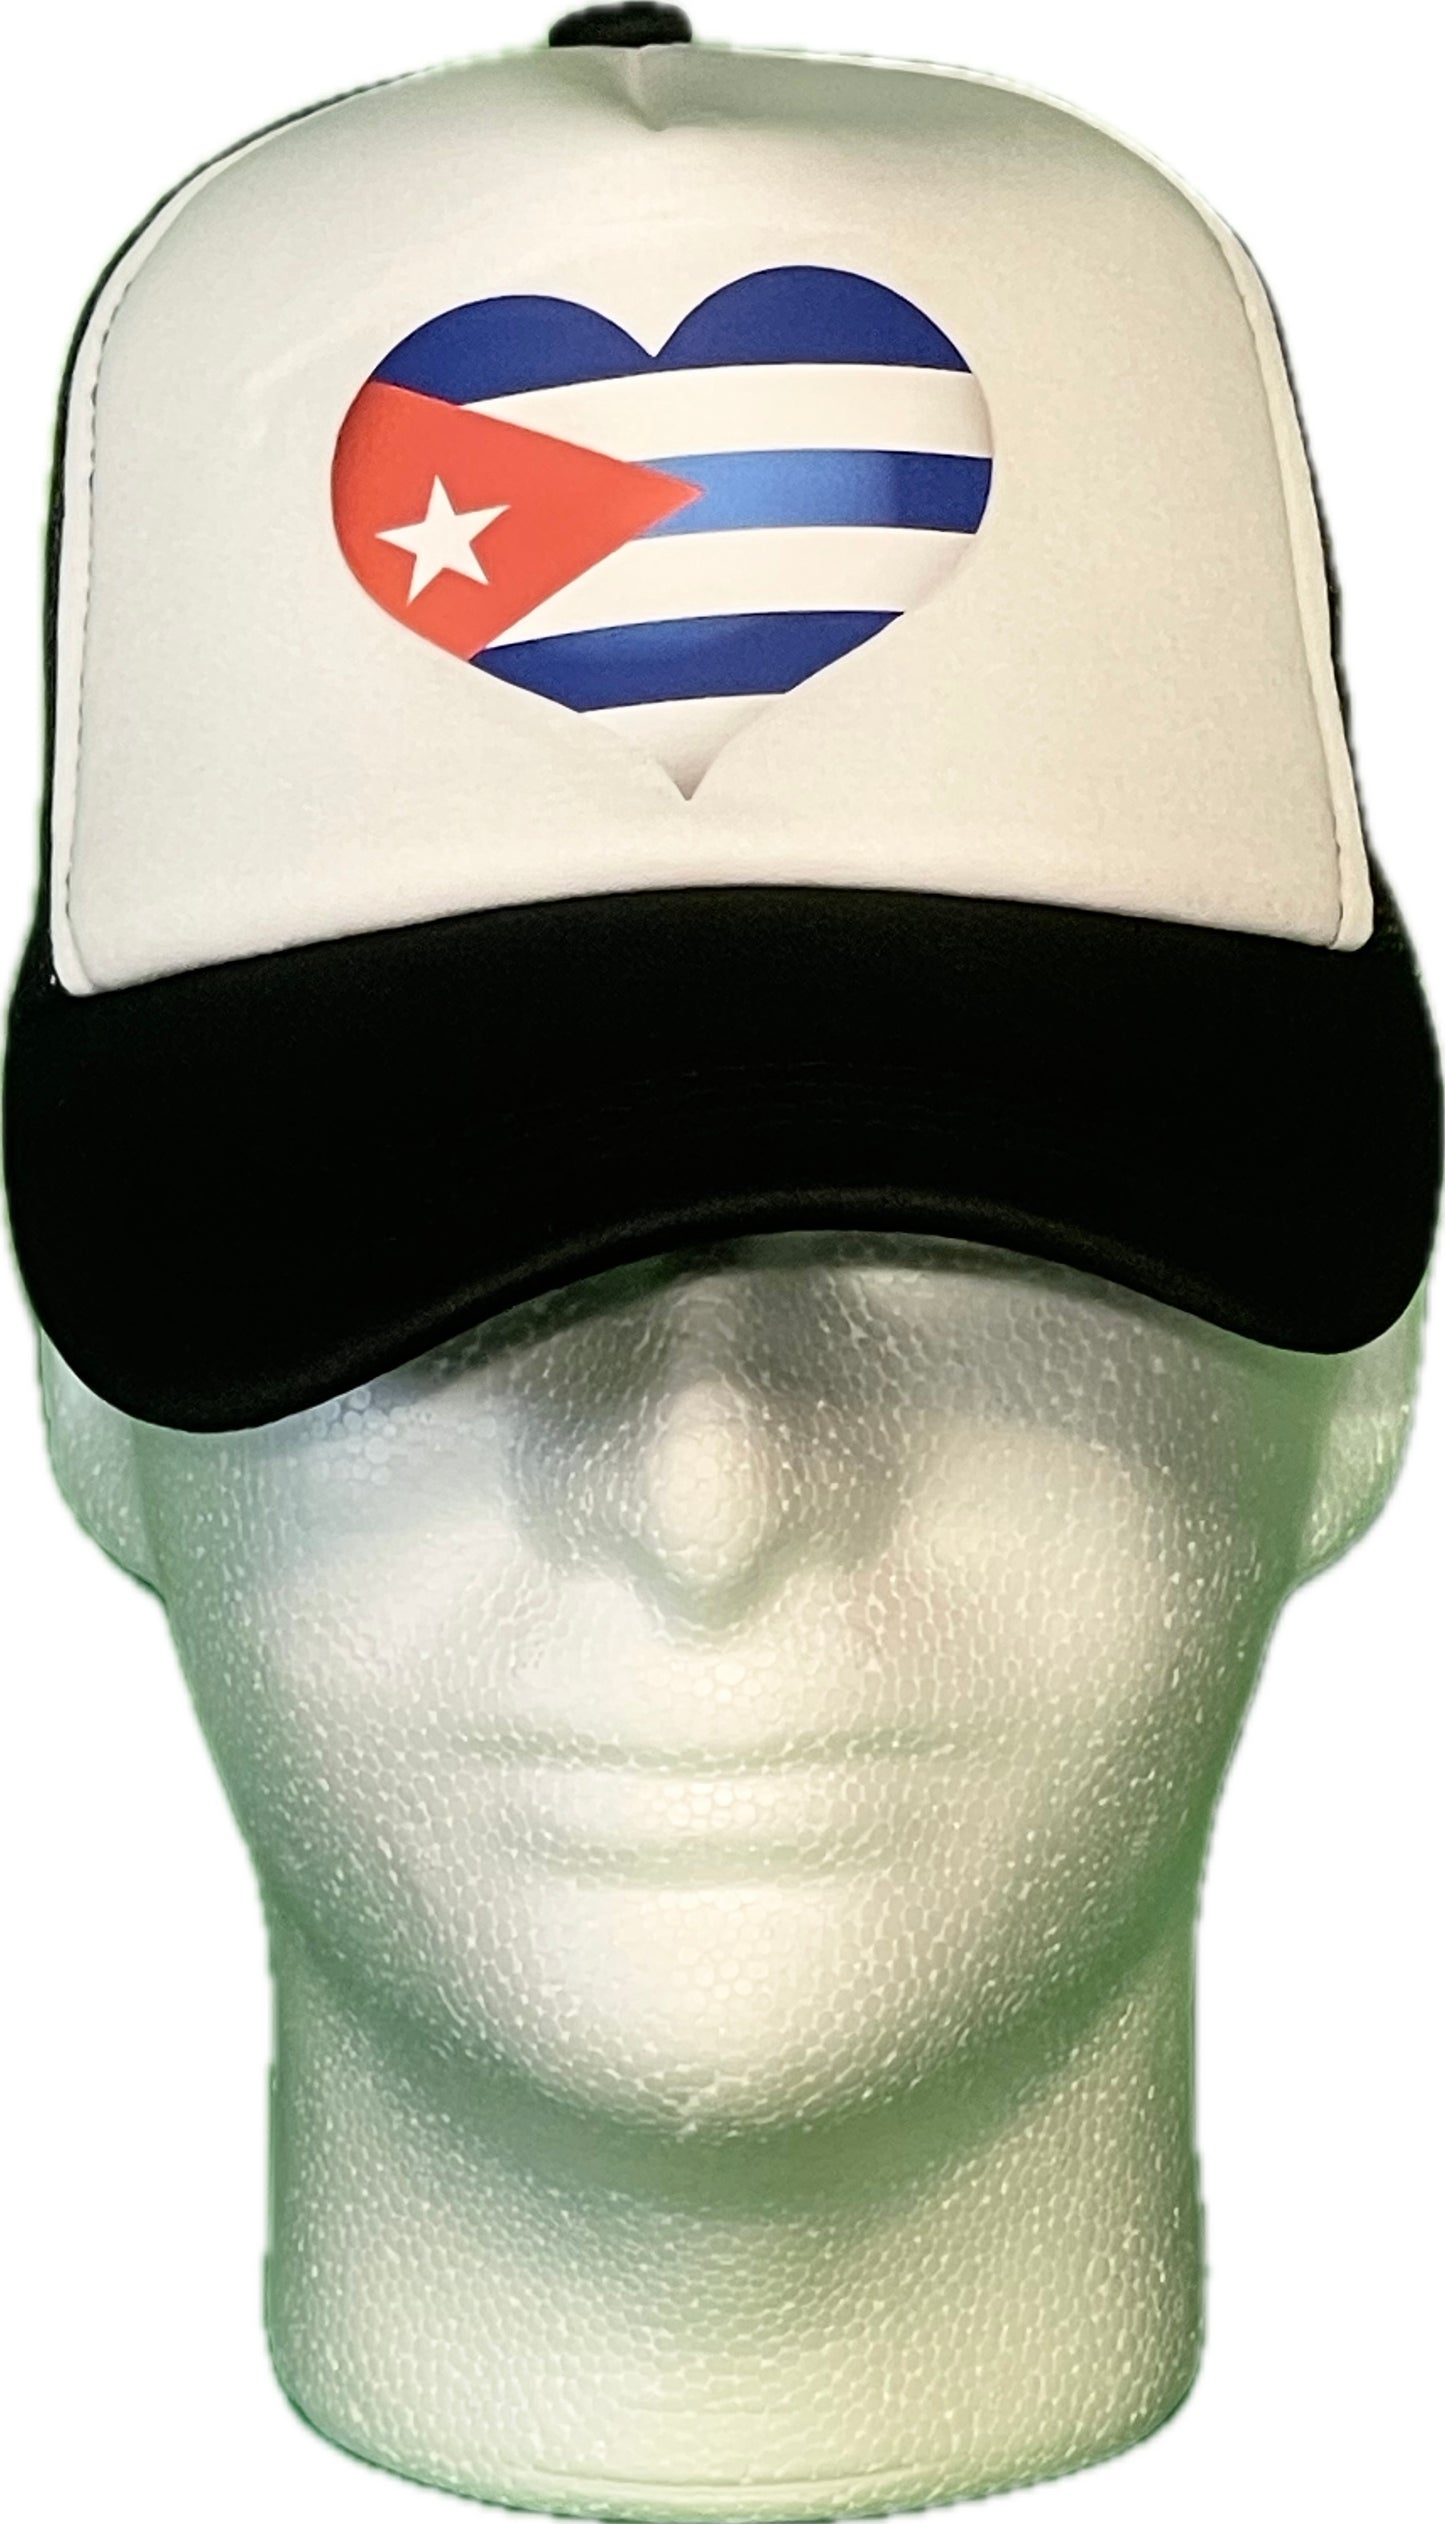 White and Black "Heart Cuba" Baseball Cap